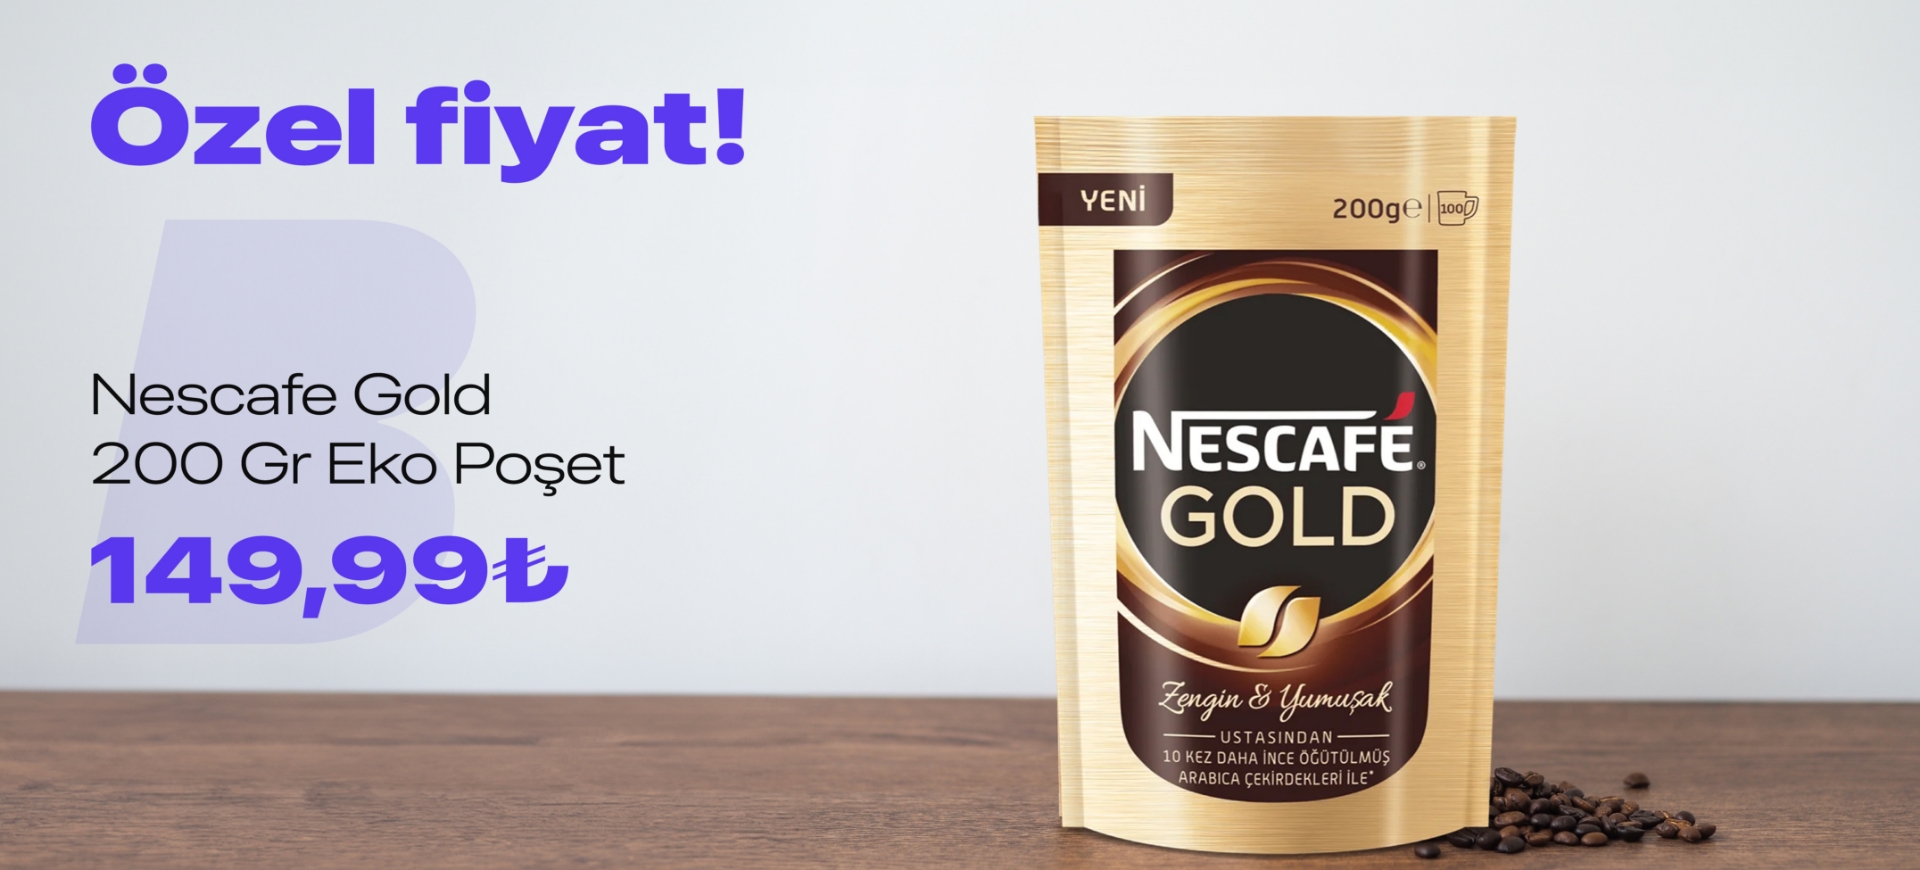 Nescafe gold 200 Gr Eko Poşet 149,99₺